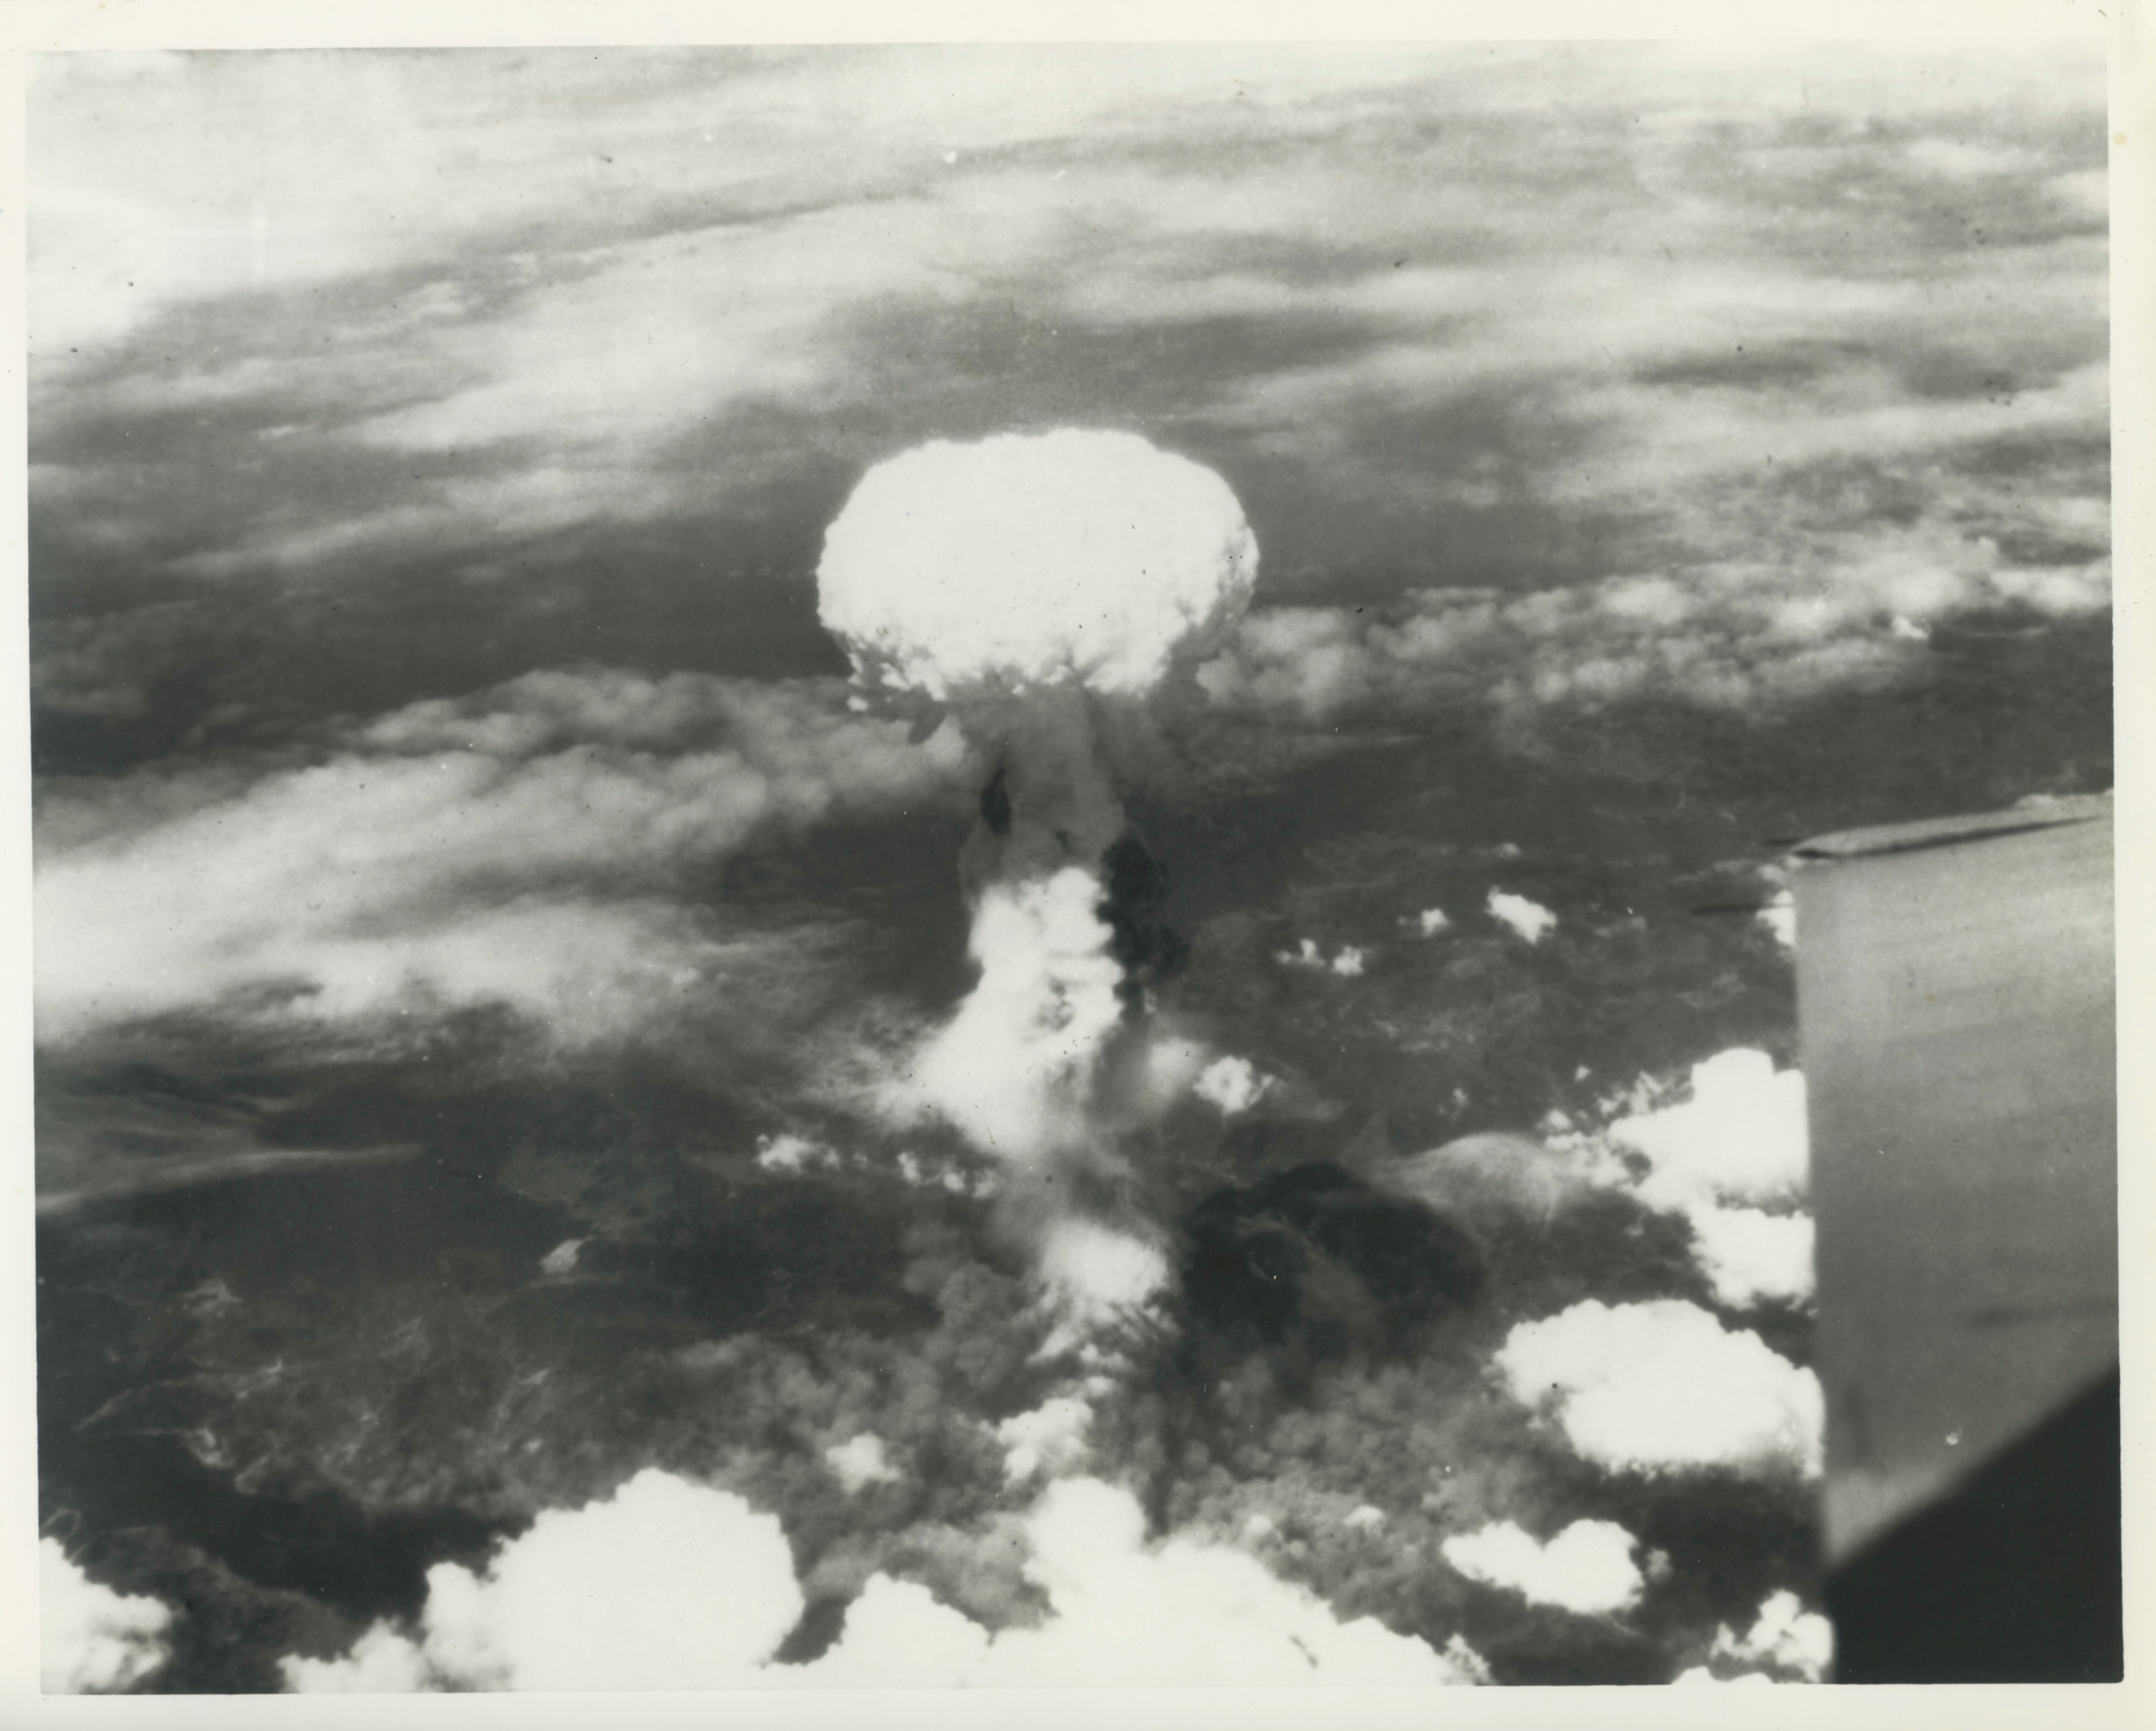 Nagasaki Mushroom Cloud Atom Bomb 8x10 Photo J-283 